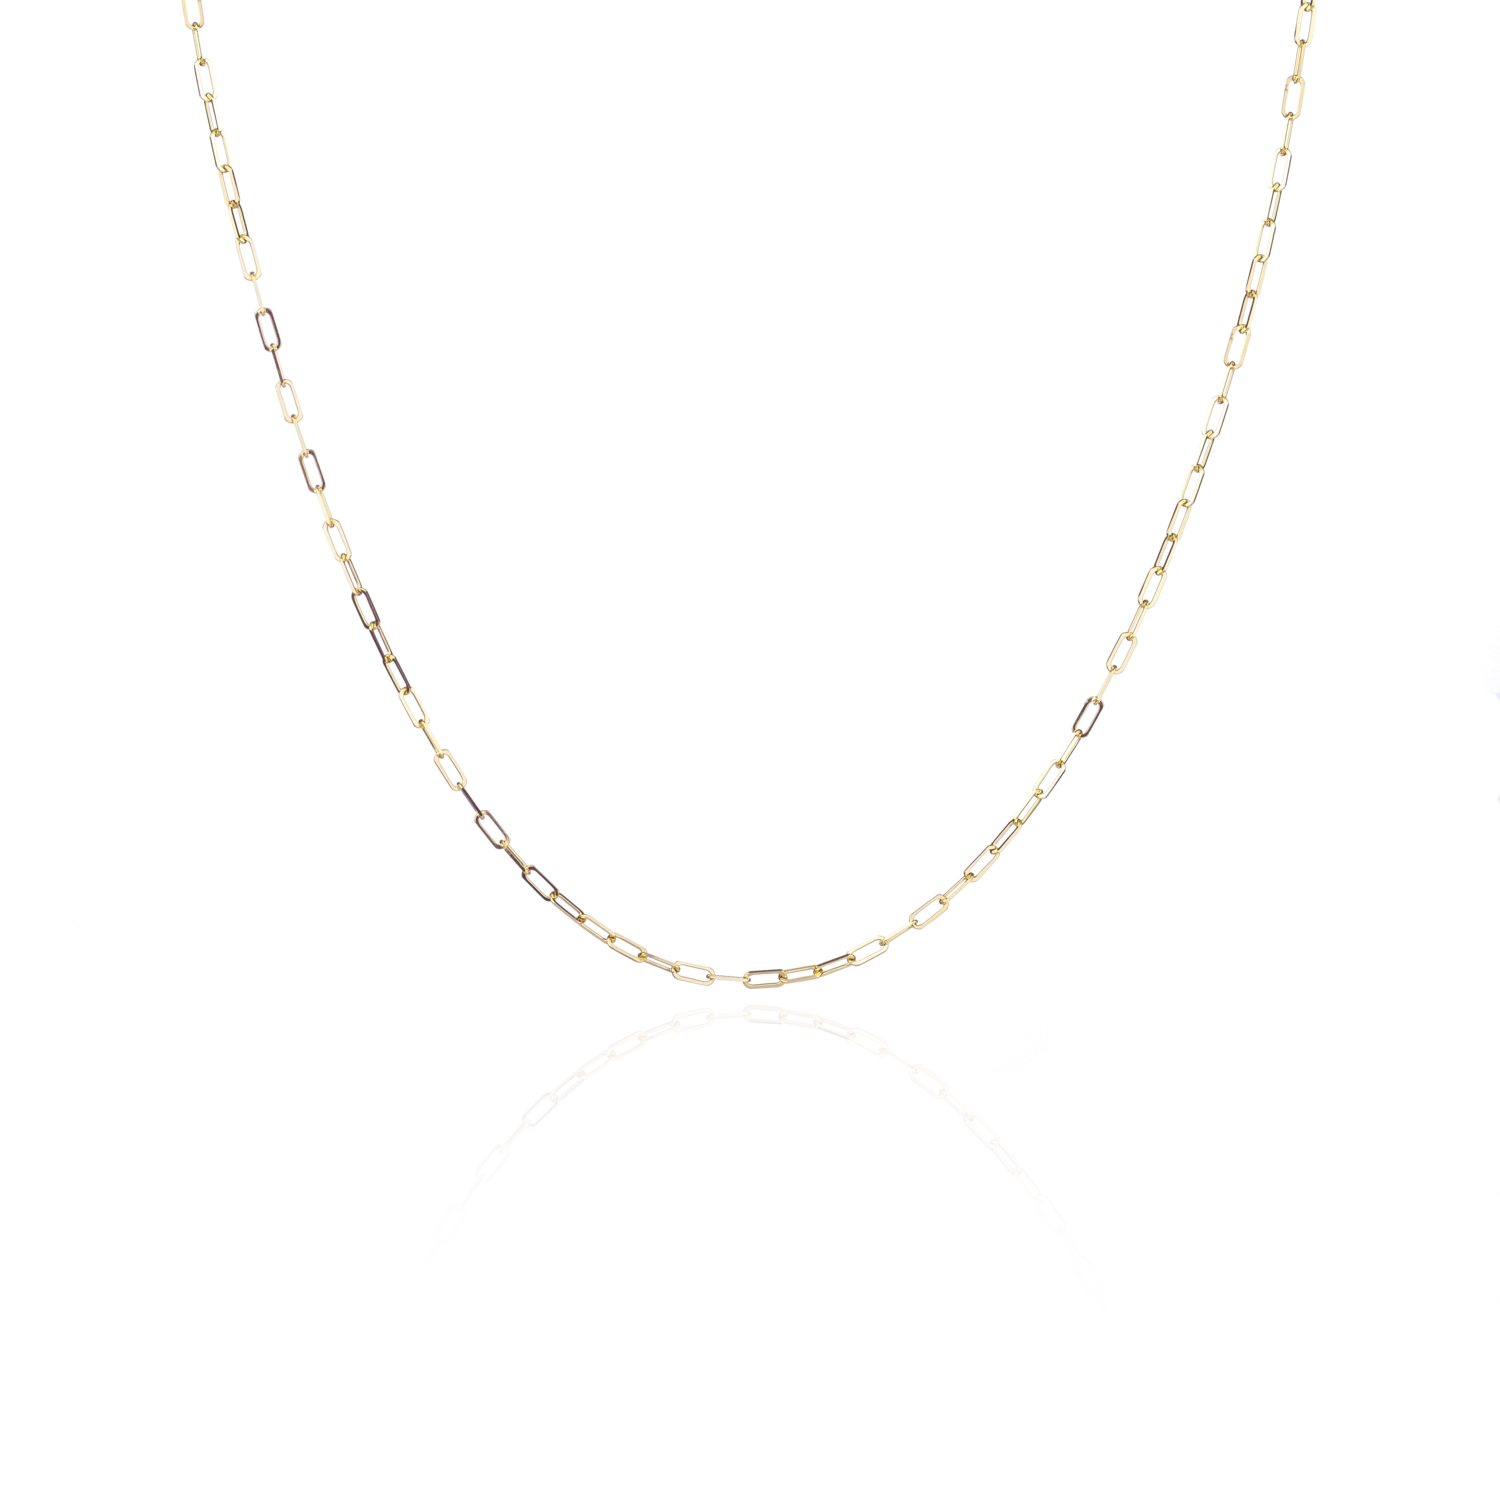 Necklace LENOX